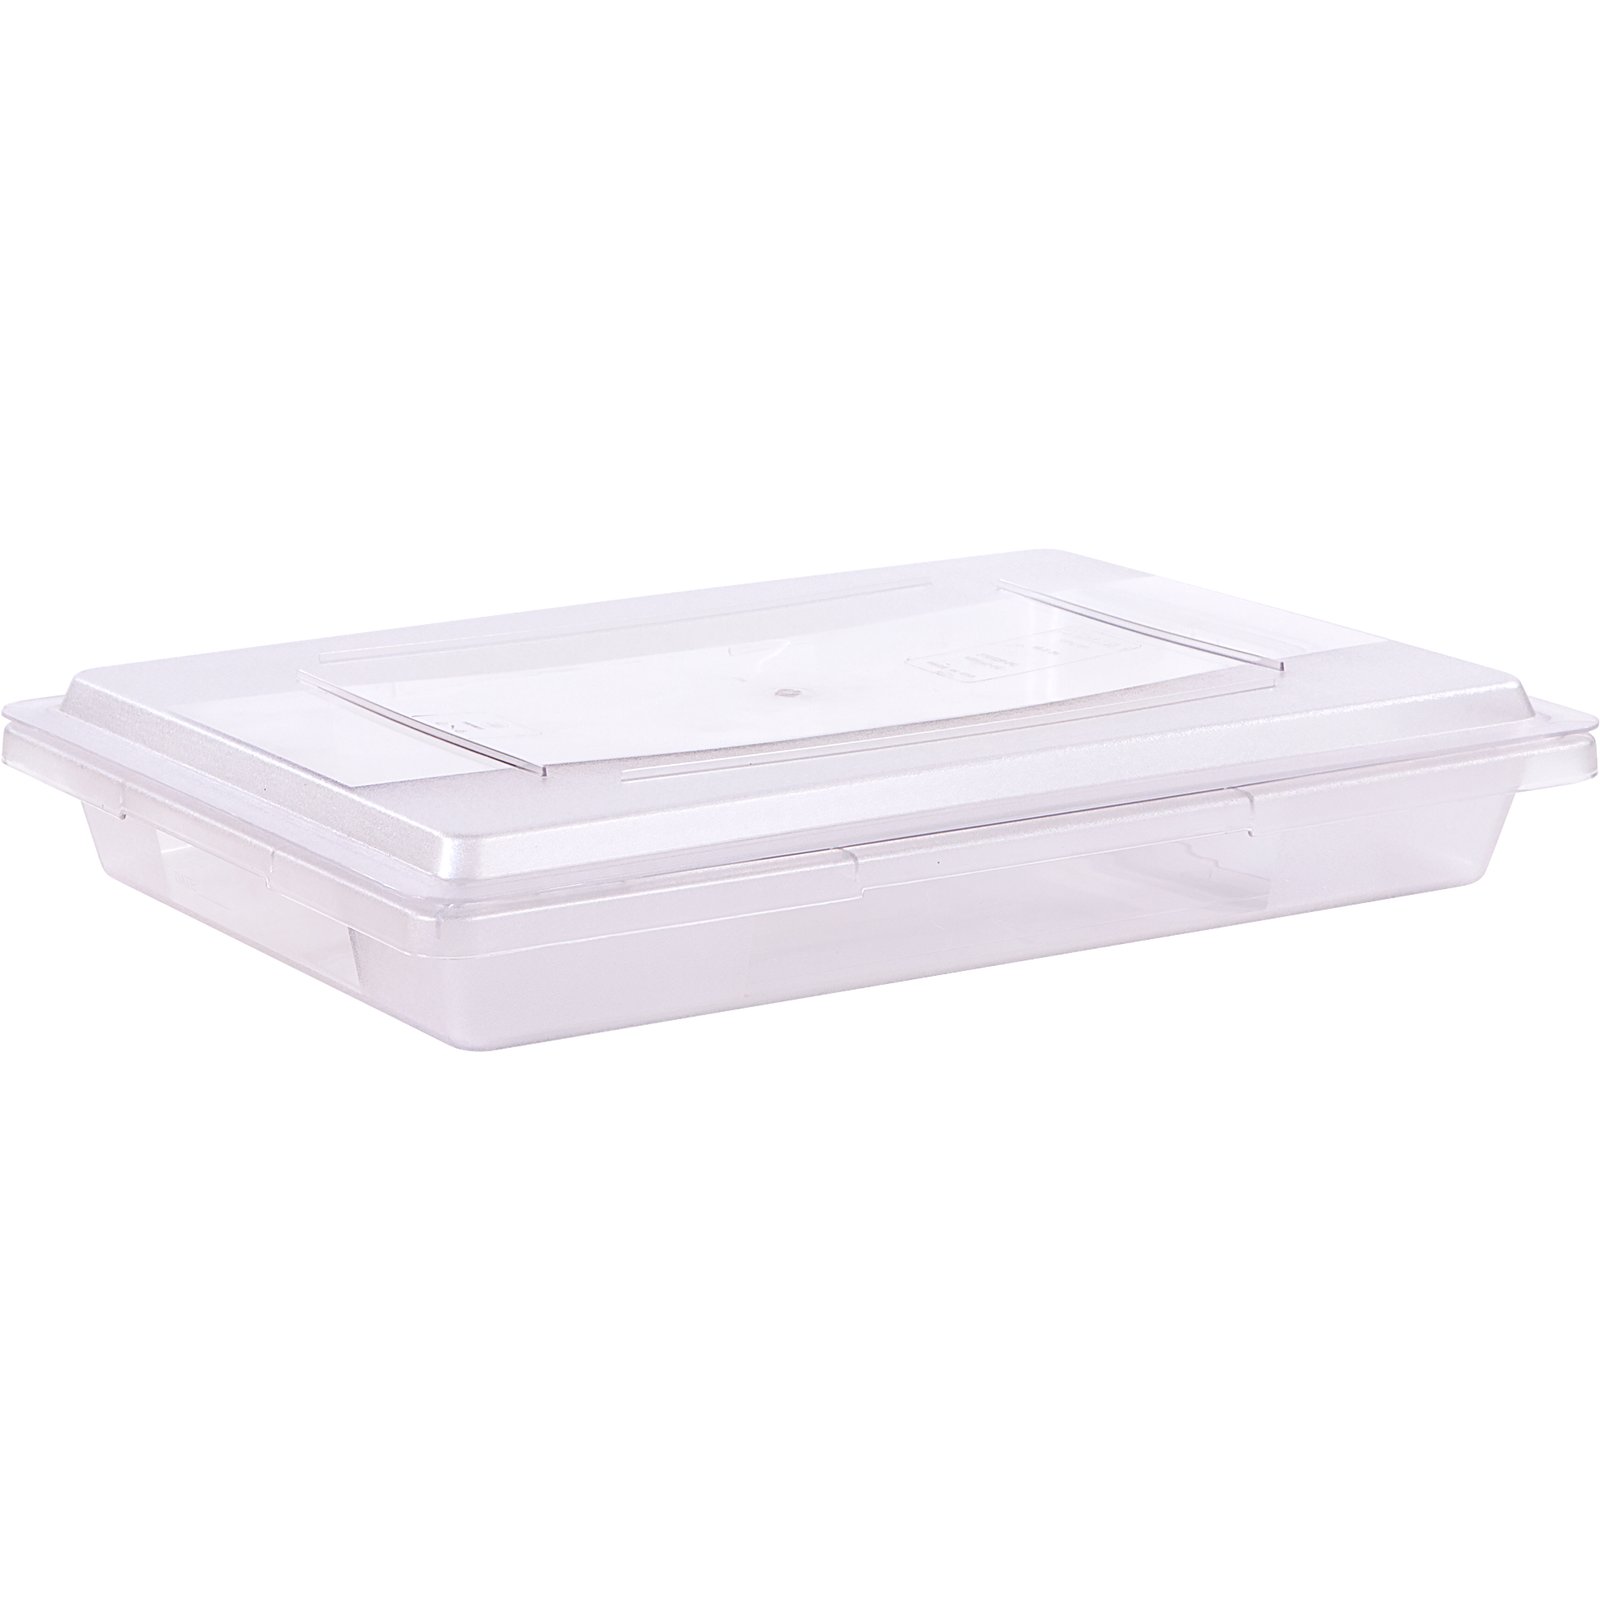 Vigor 26 x 18 x 9 Clear Polycarbonate Food Storage Box with Lid